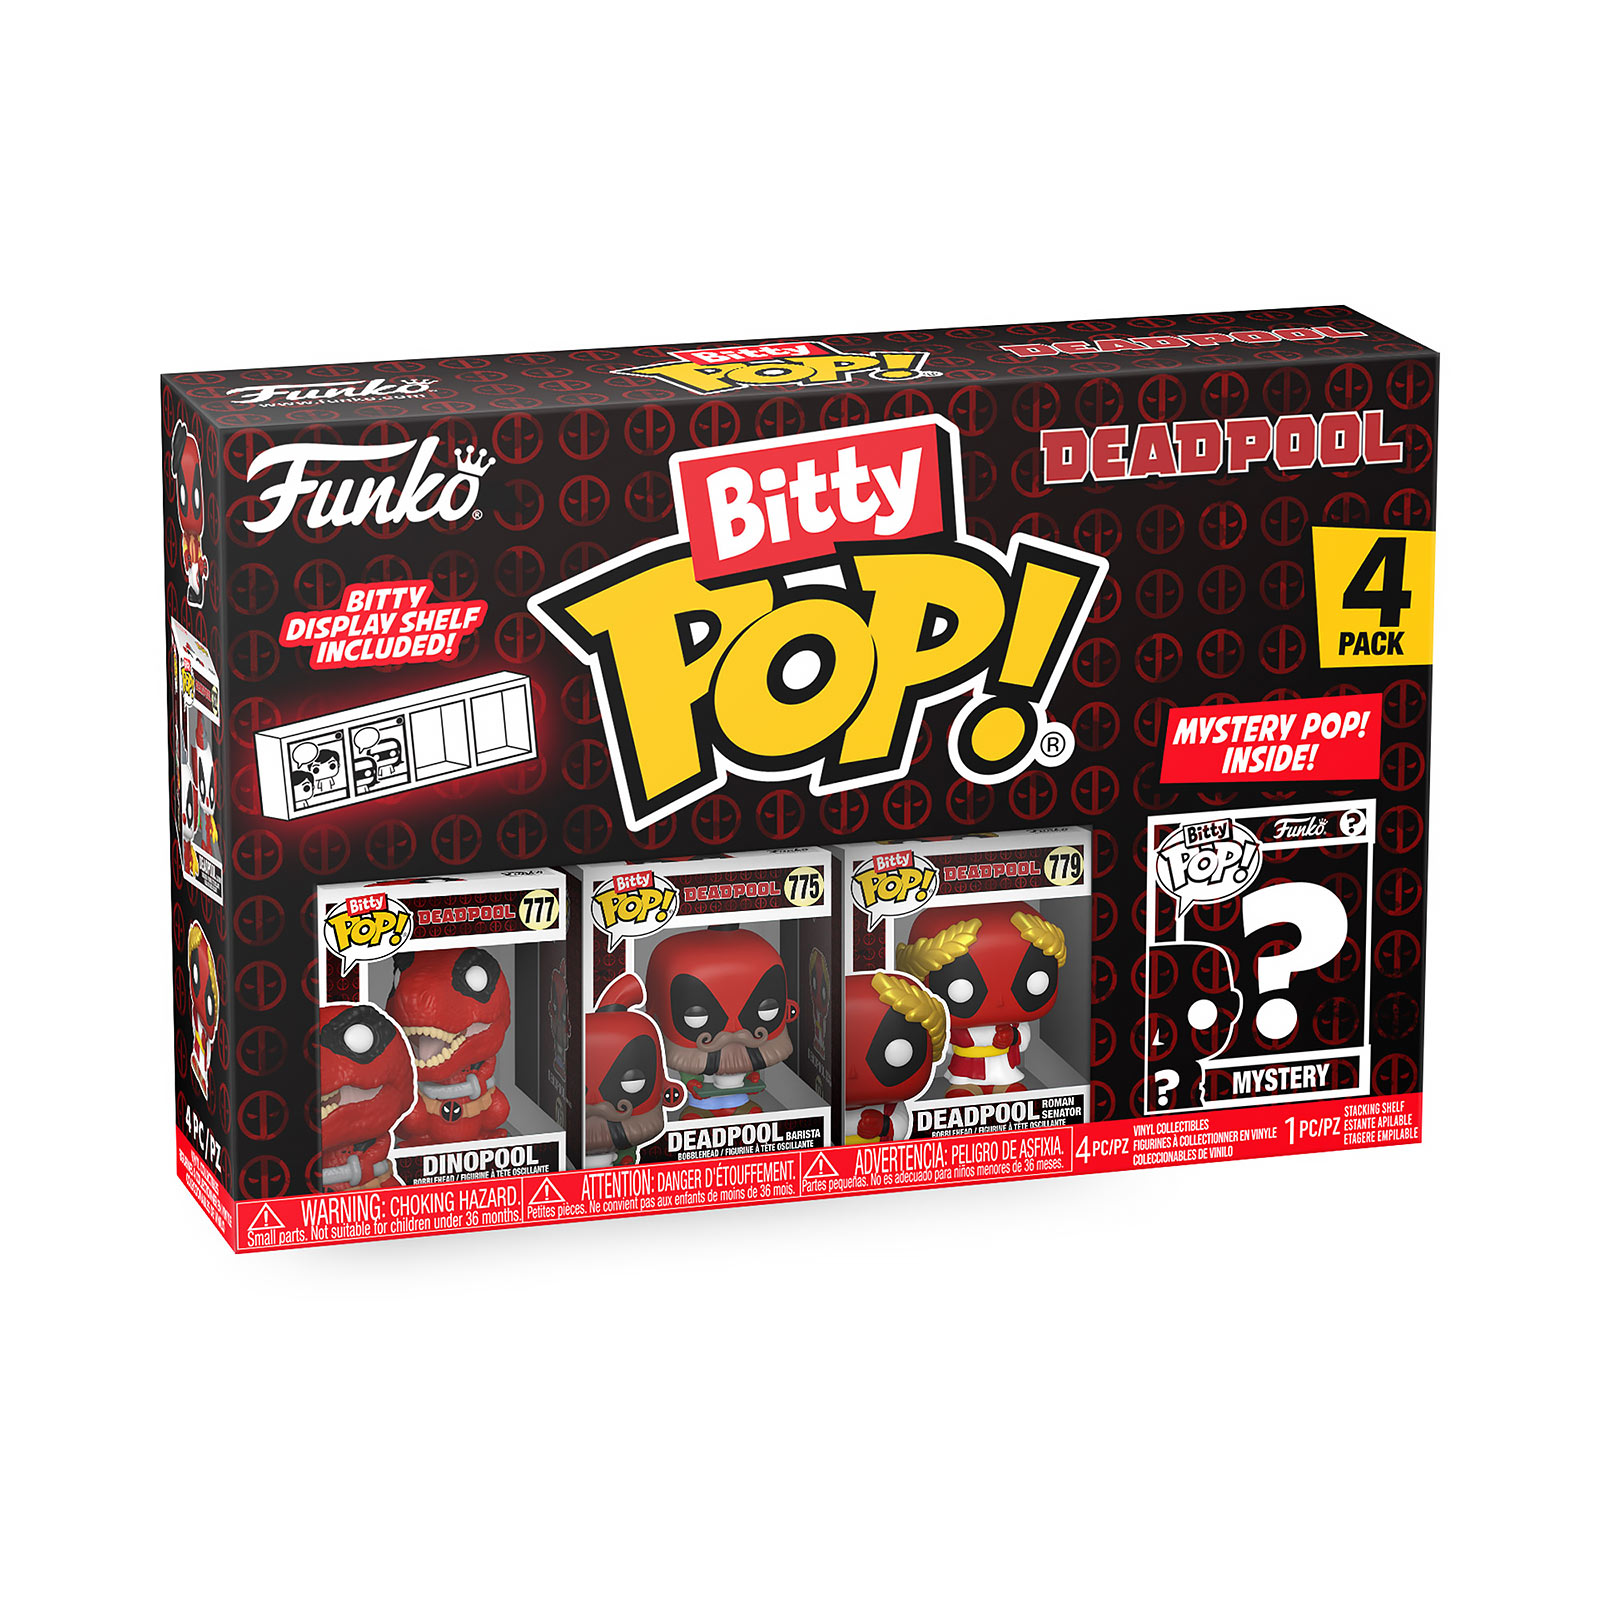 Deadpool - Funko Bitty Pop 4-piece Figure Set Series 3